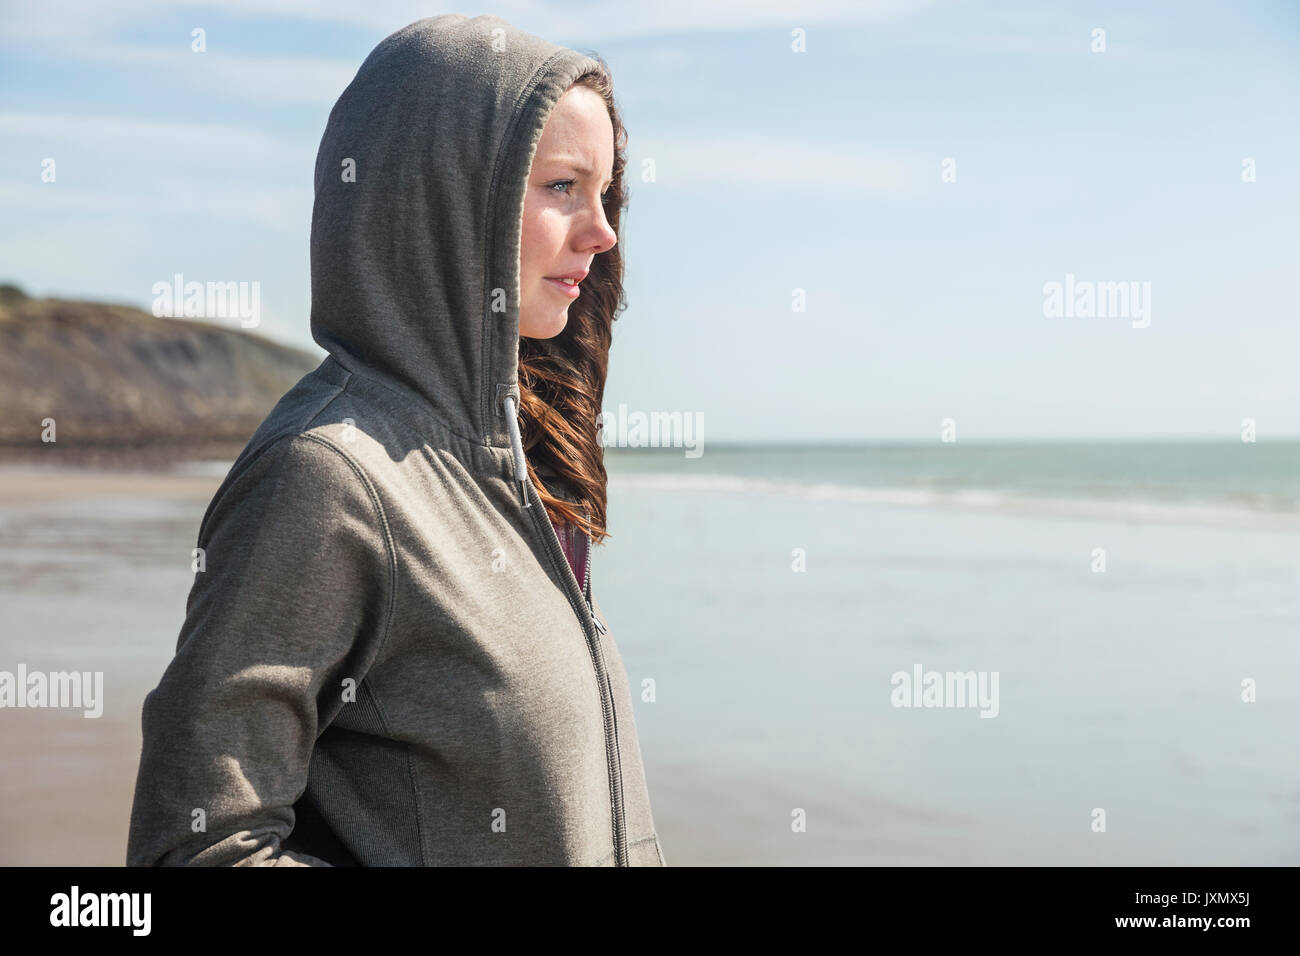 Junge Frau am Strand in Kapuzenoberteil, Folkestone, Großbritannien Stockfoto